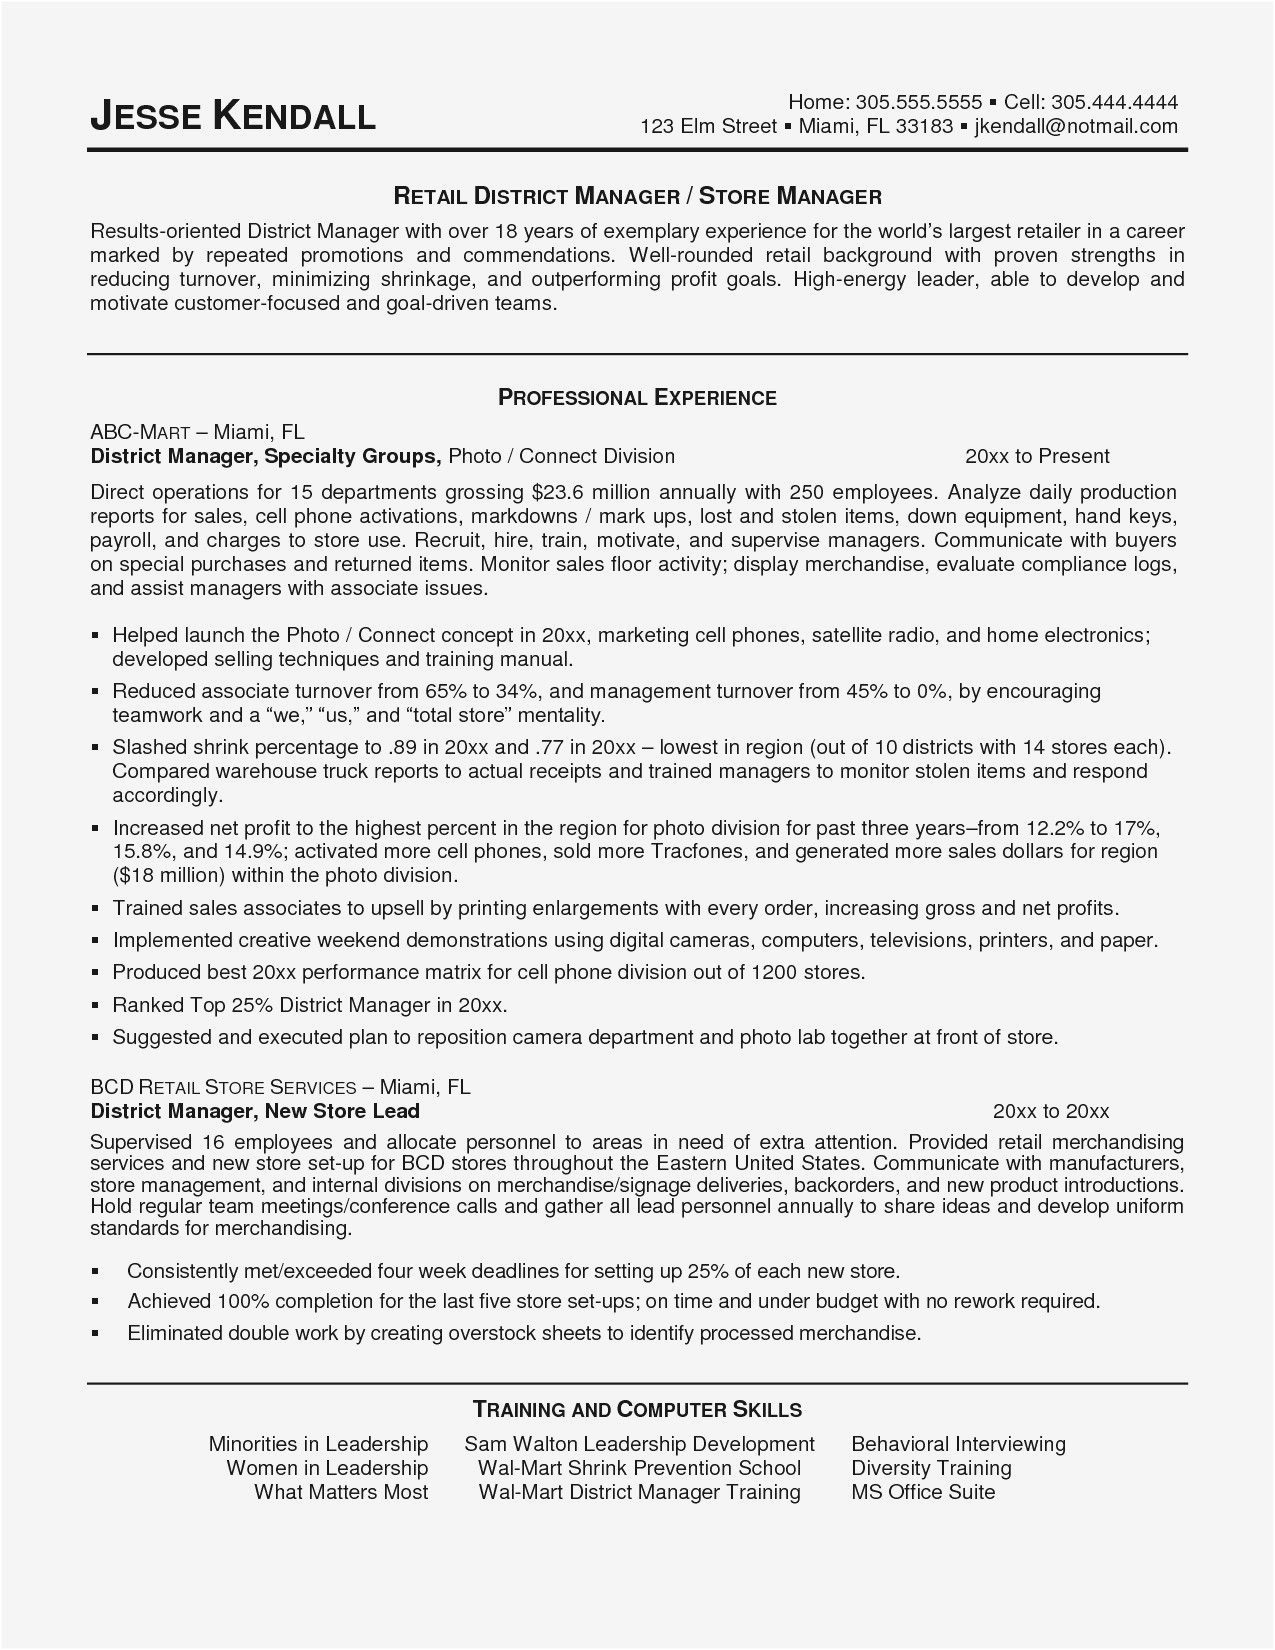 Sample Resume Objective for Master S Program Statement Purpose Sample for Masters Degree